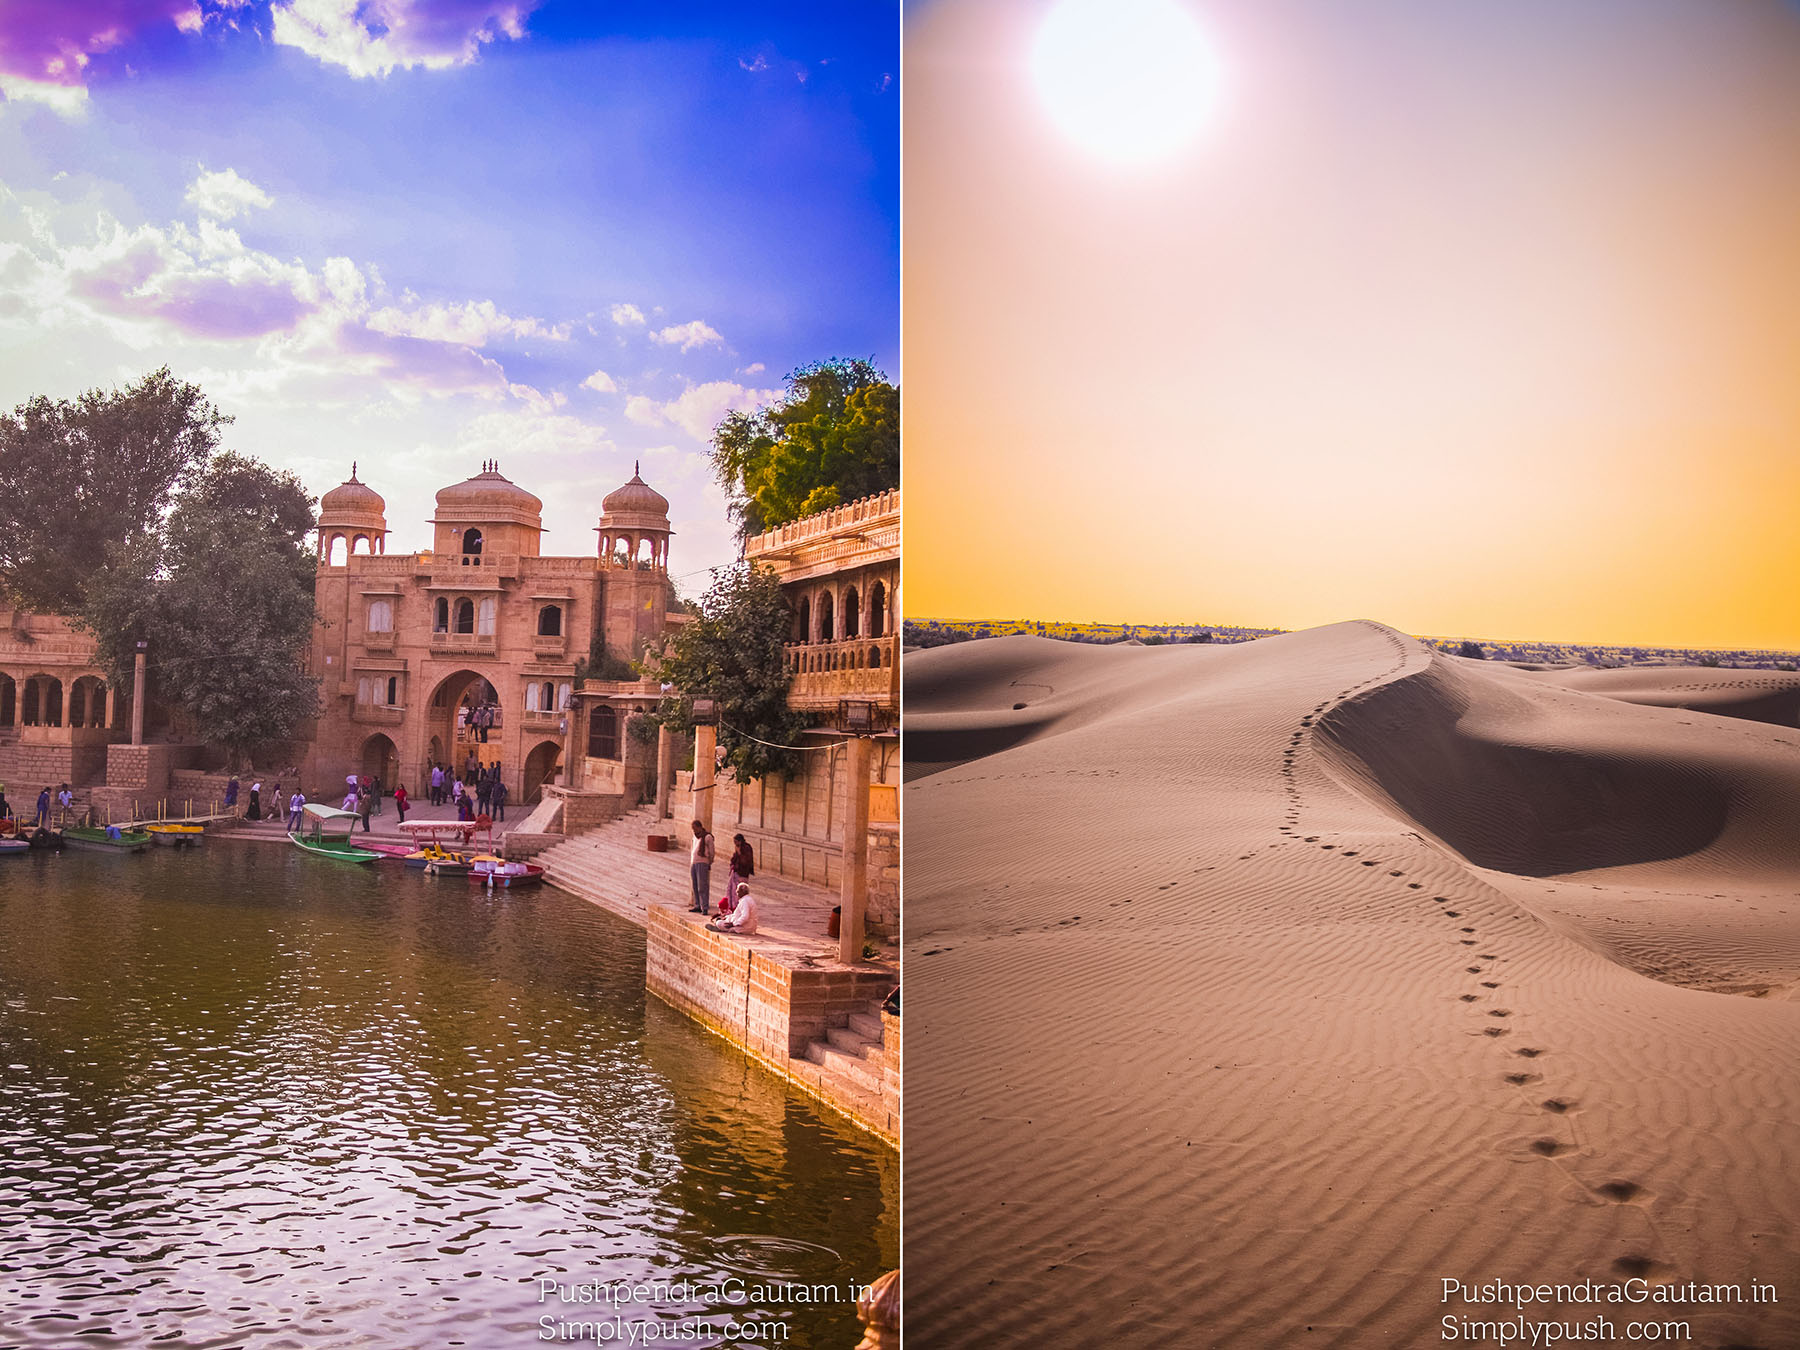 Jaisalmer-rajasthan-desert-lake-pics-india-the-great-indian-desert-pics-best-travel-photographer-pushpendragautam-pics-india